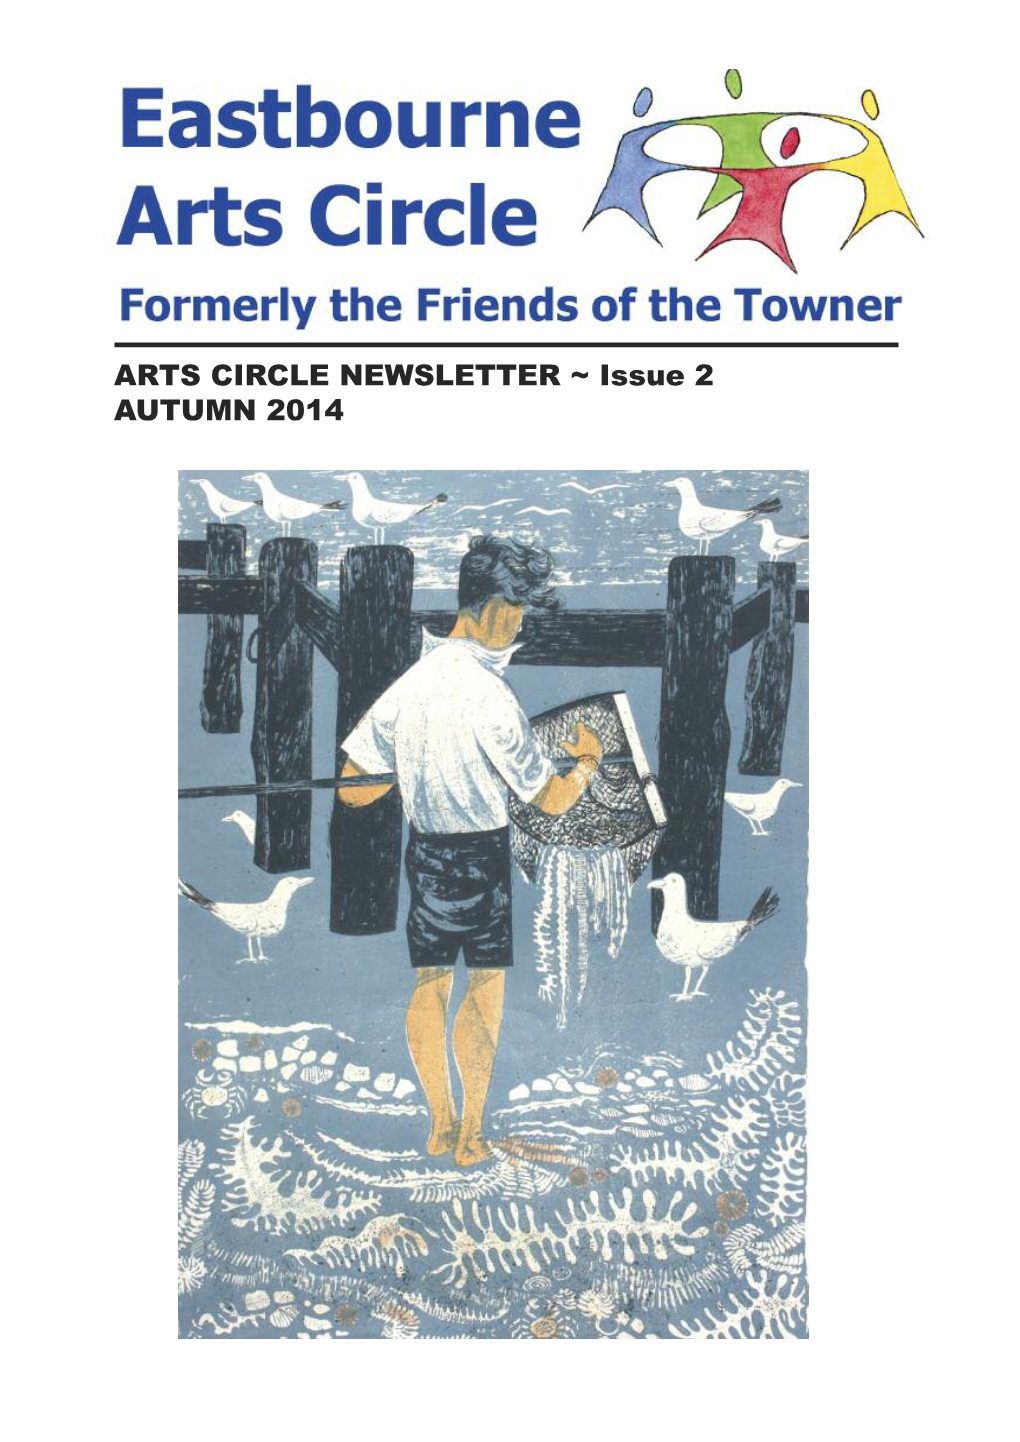 ARTS CIRCLE NEWSLETTER ~ Issue 2 AUTUMN 2014 Stop Press - Speaker Change